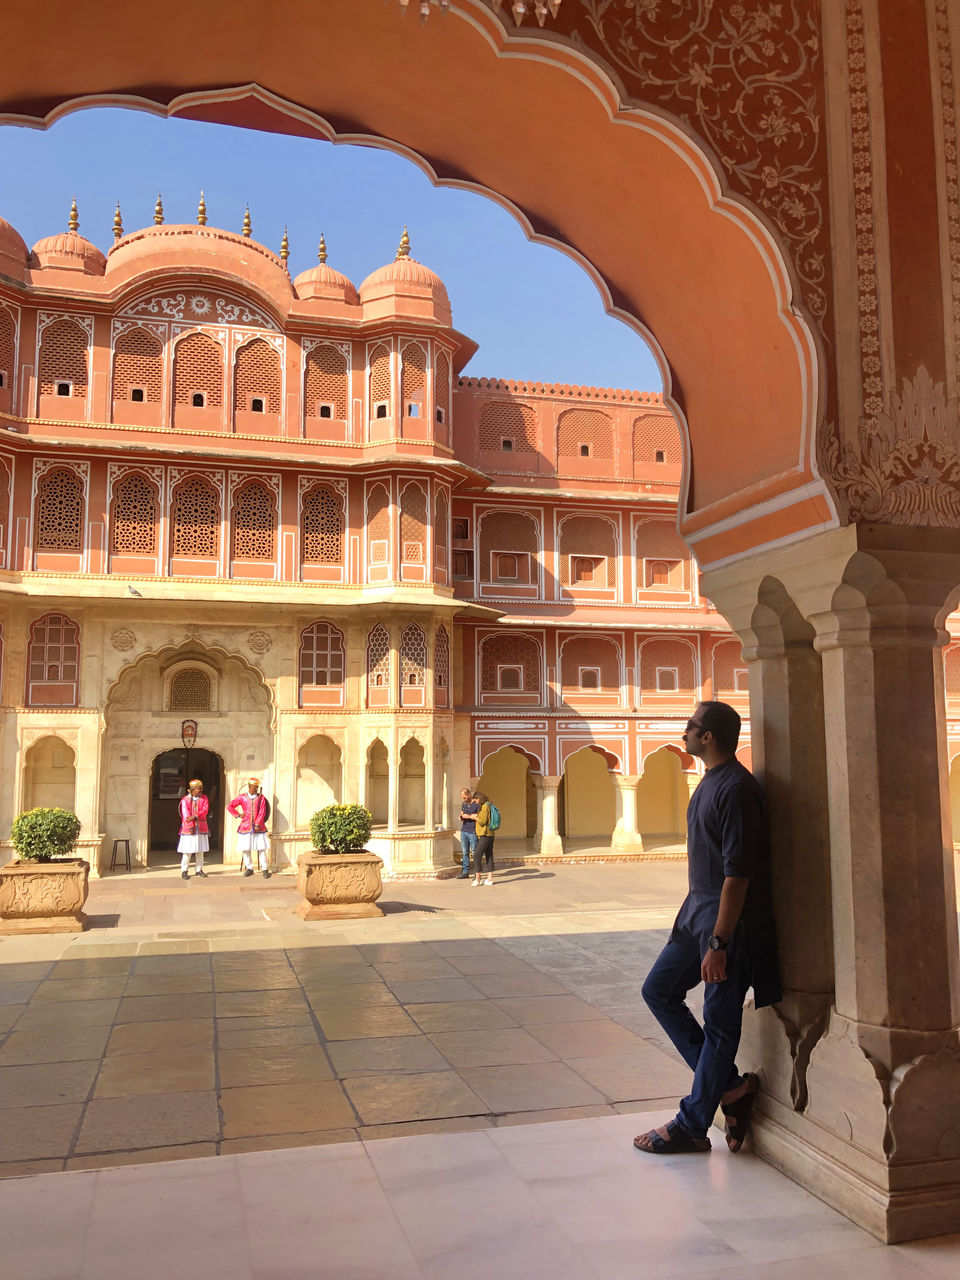 Photo of City Palace, Gangori Bazaar, J.D.A. Market, Pink City, Jaipur, Rajasthan, India by Abagfullofmaps